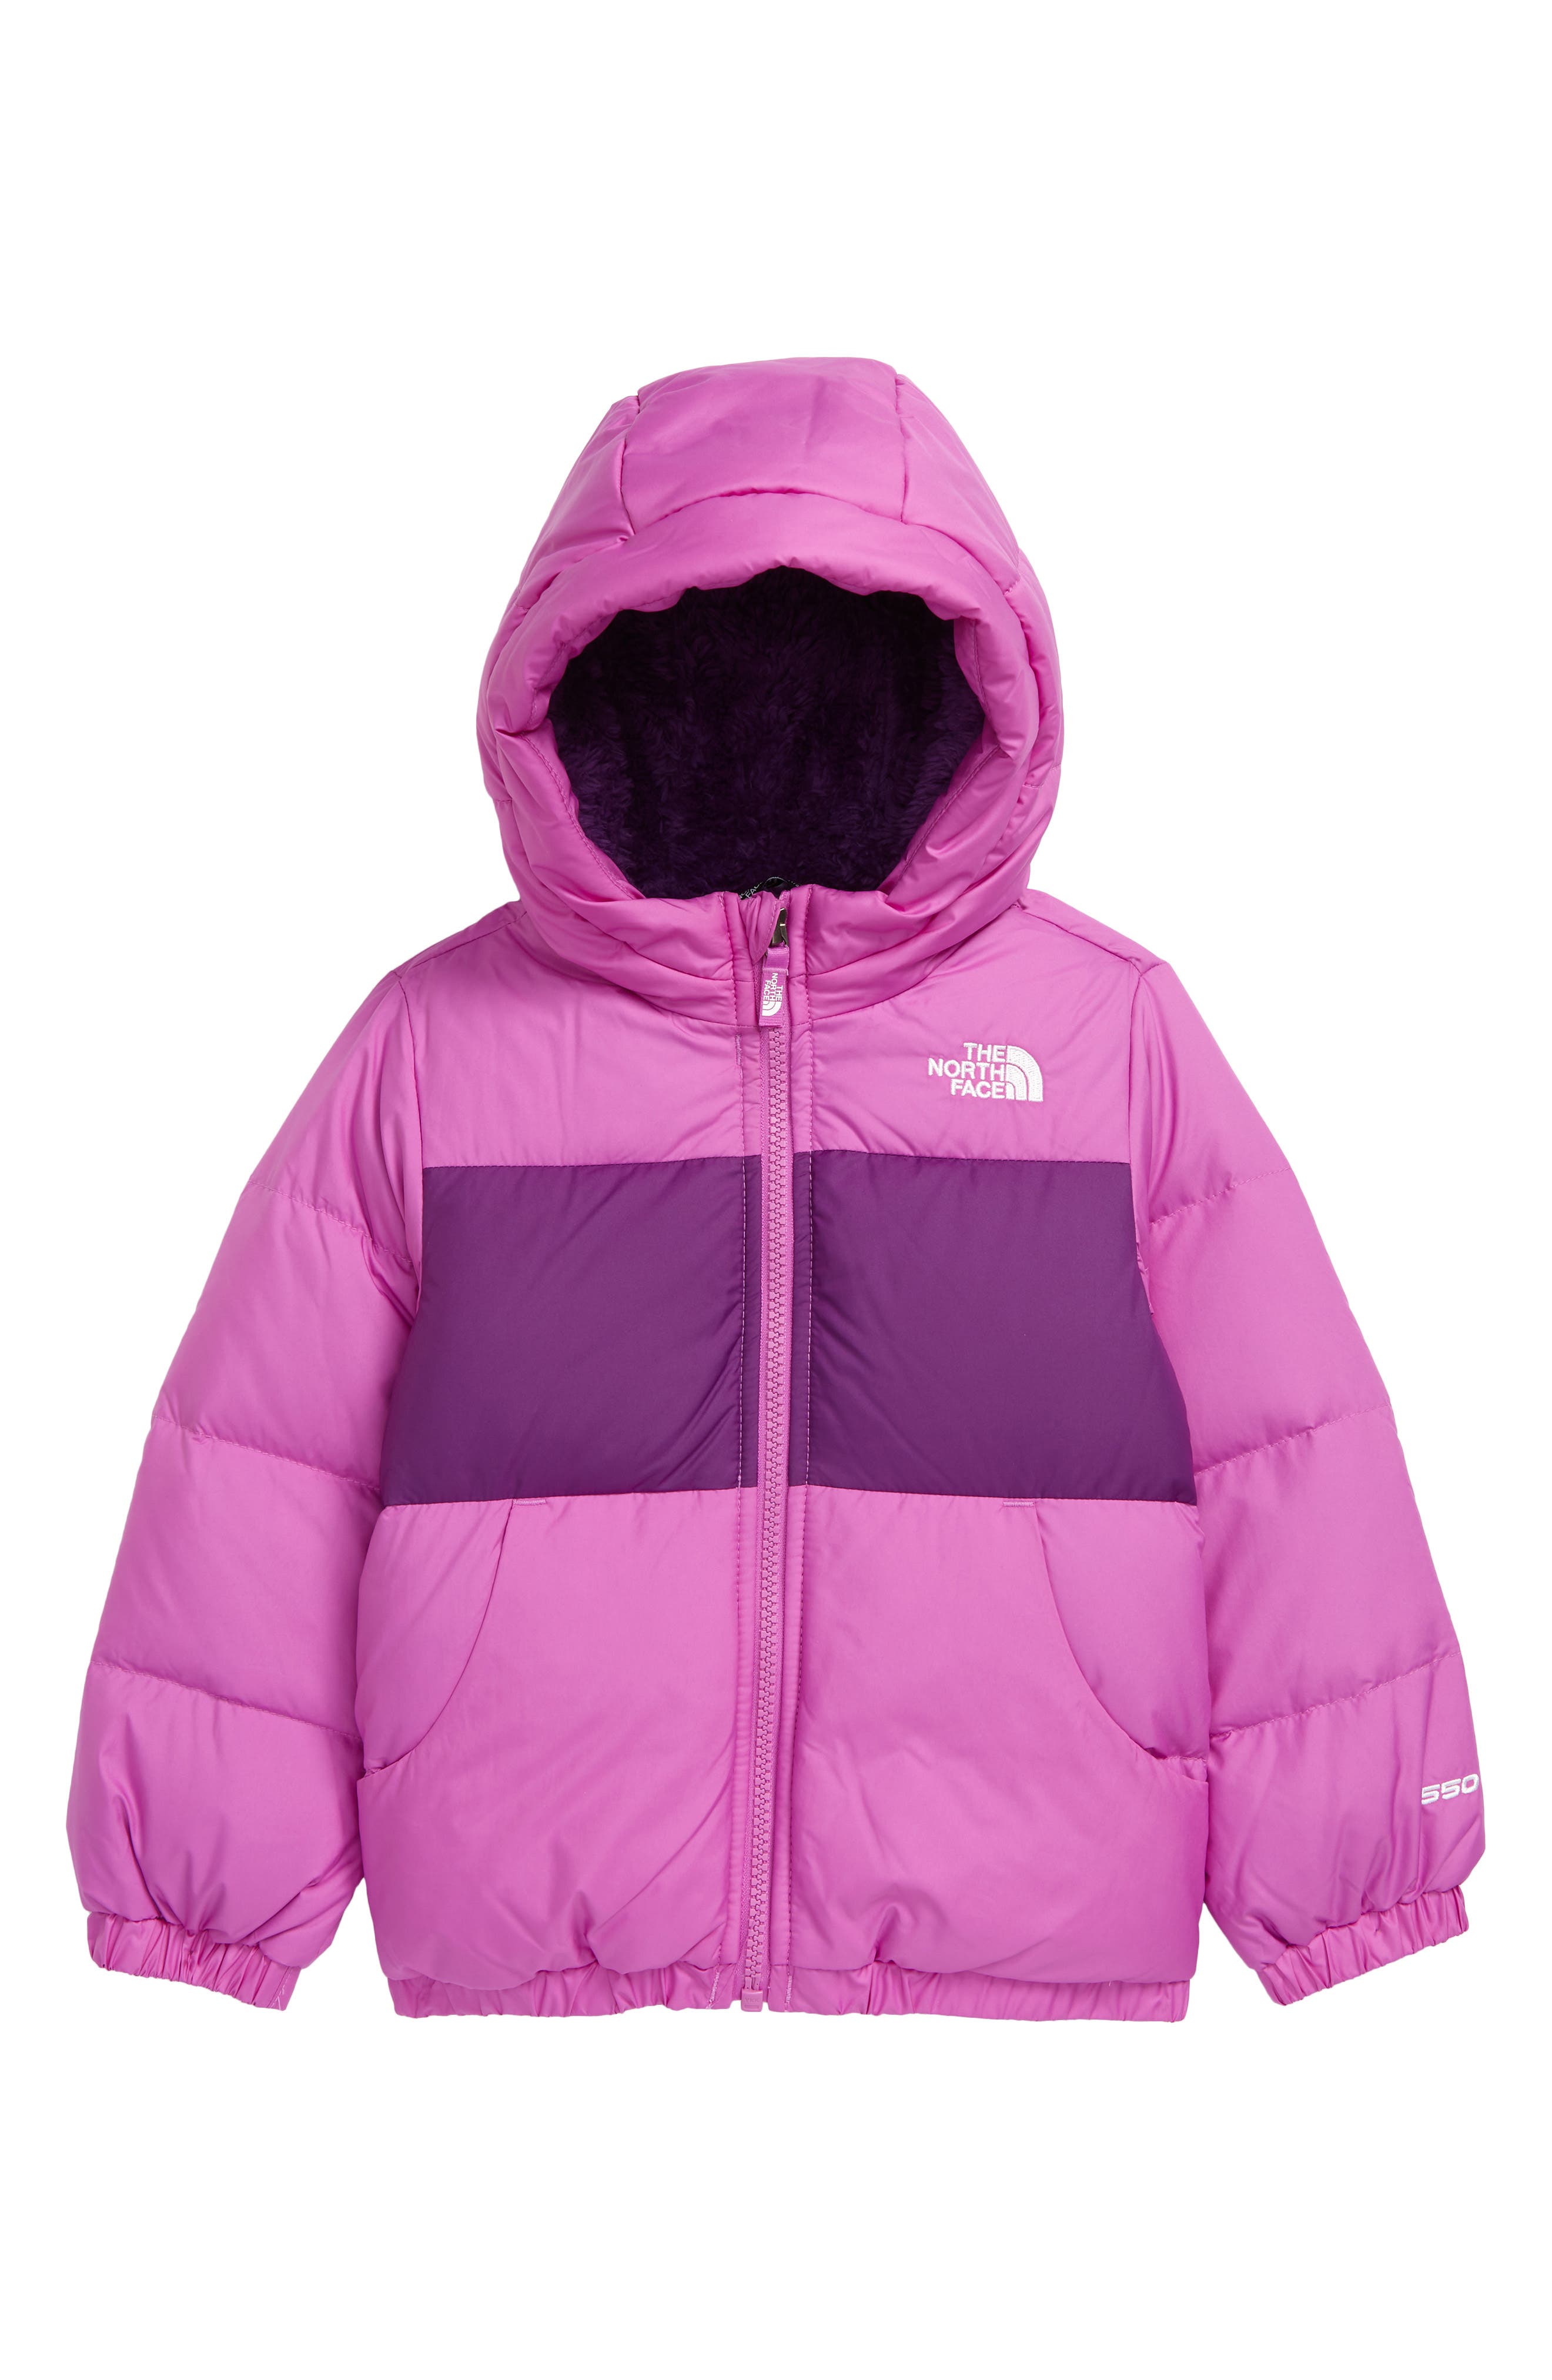 girls purple jacket